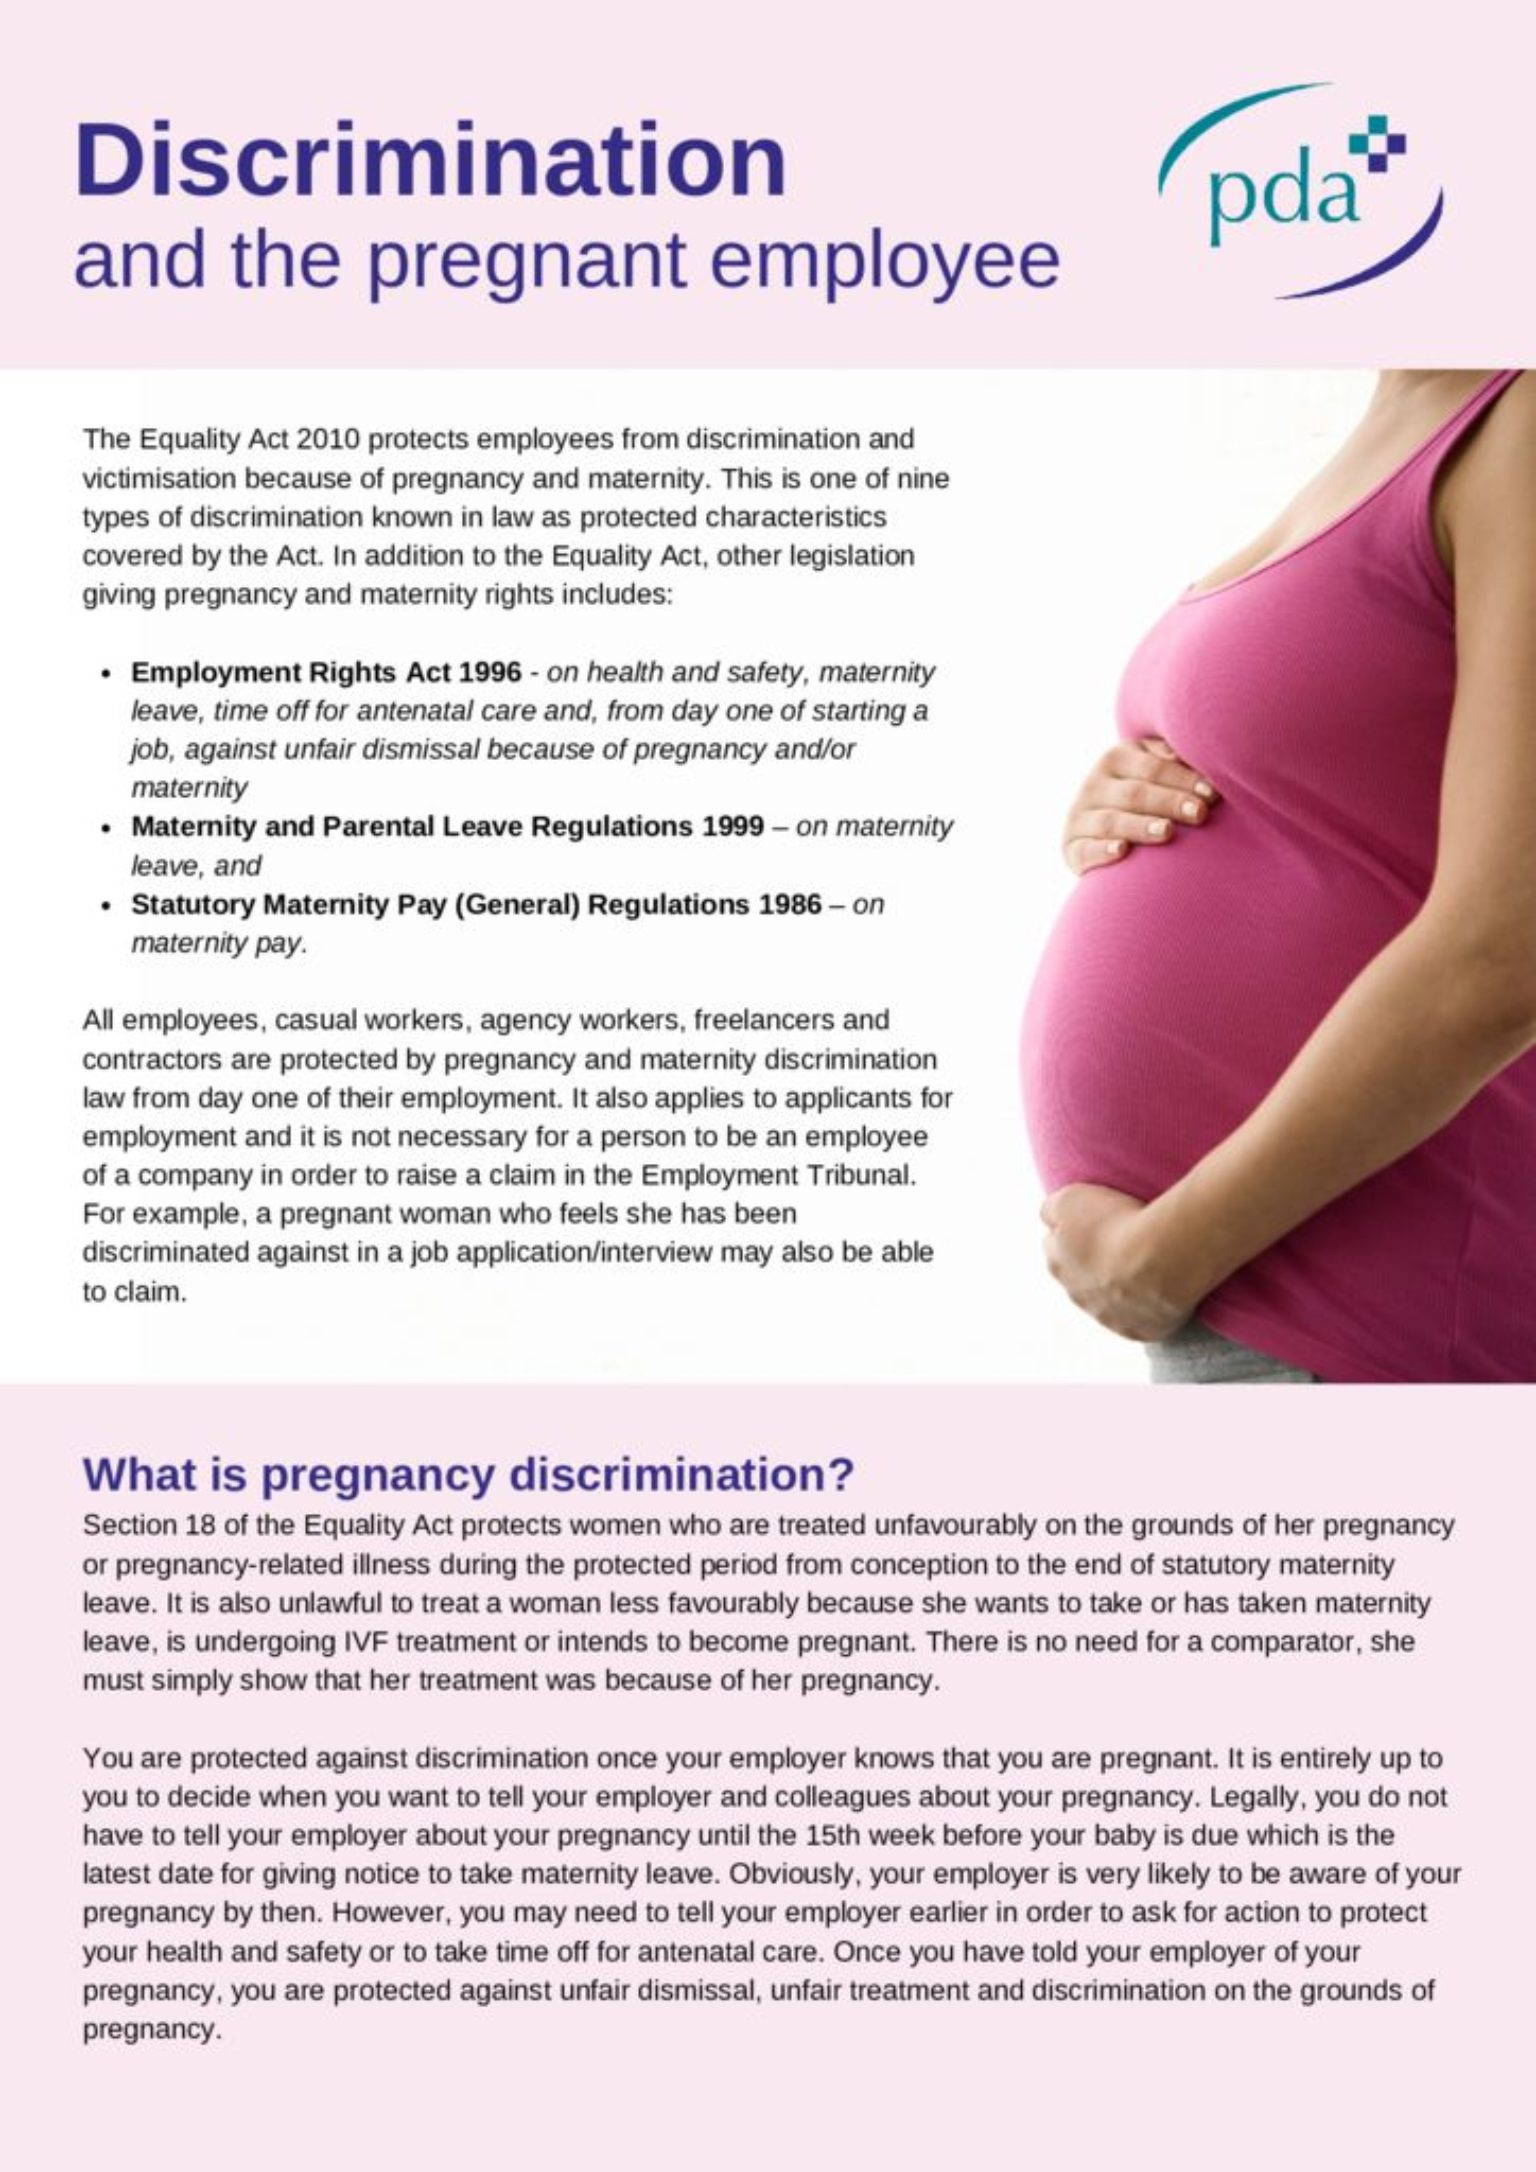 pregnancy discrimination at work essay